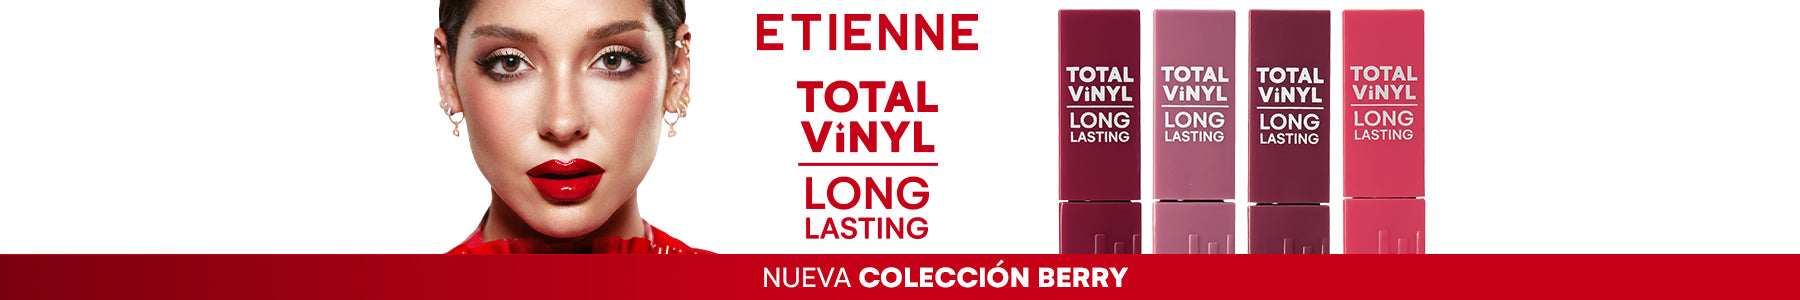 Total Vinyl